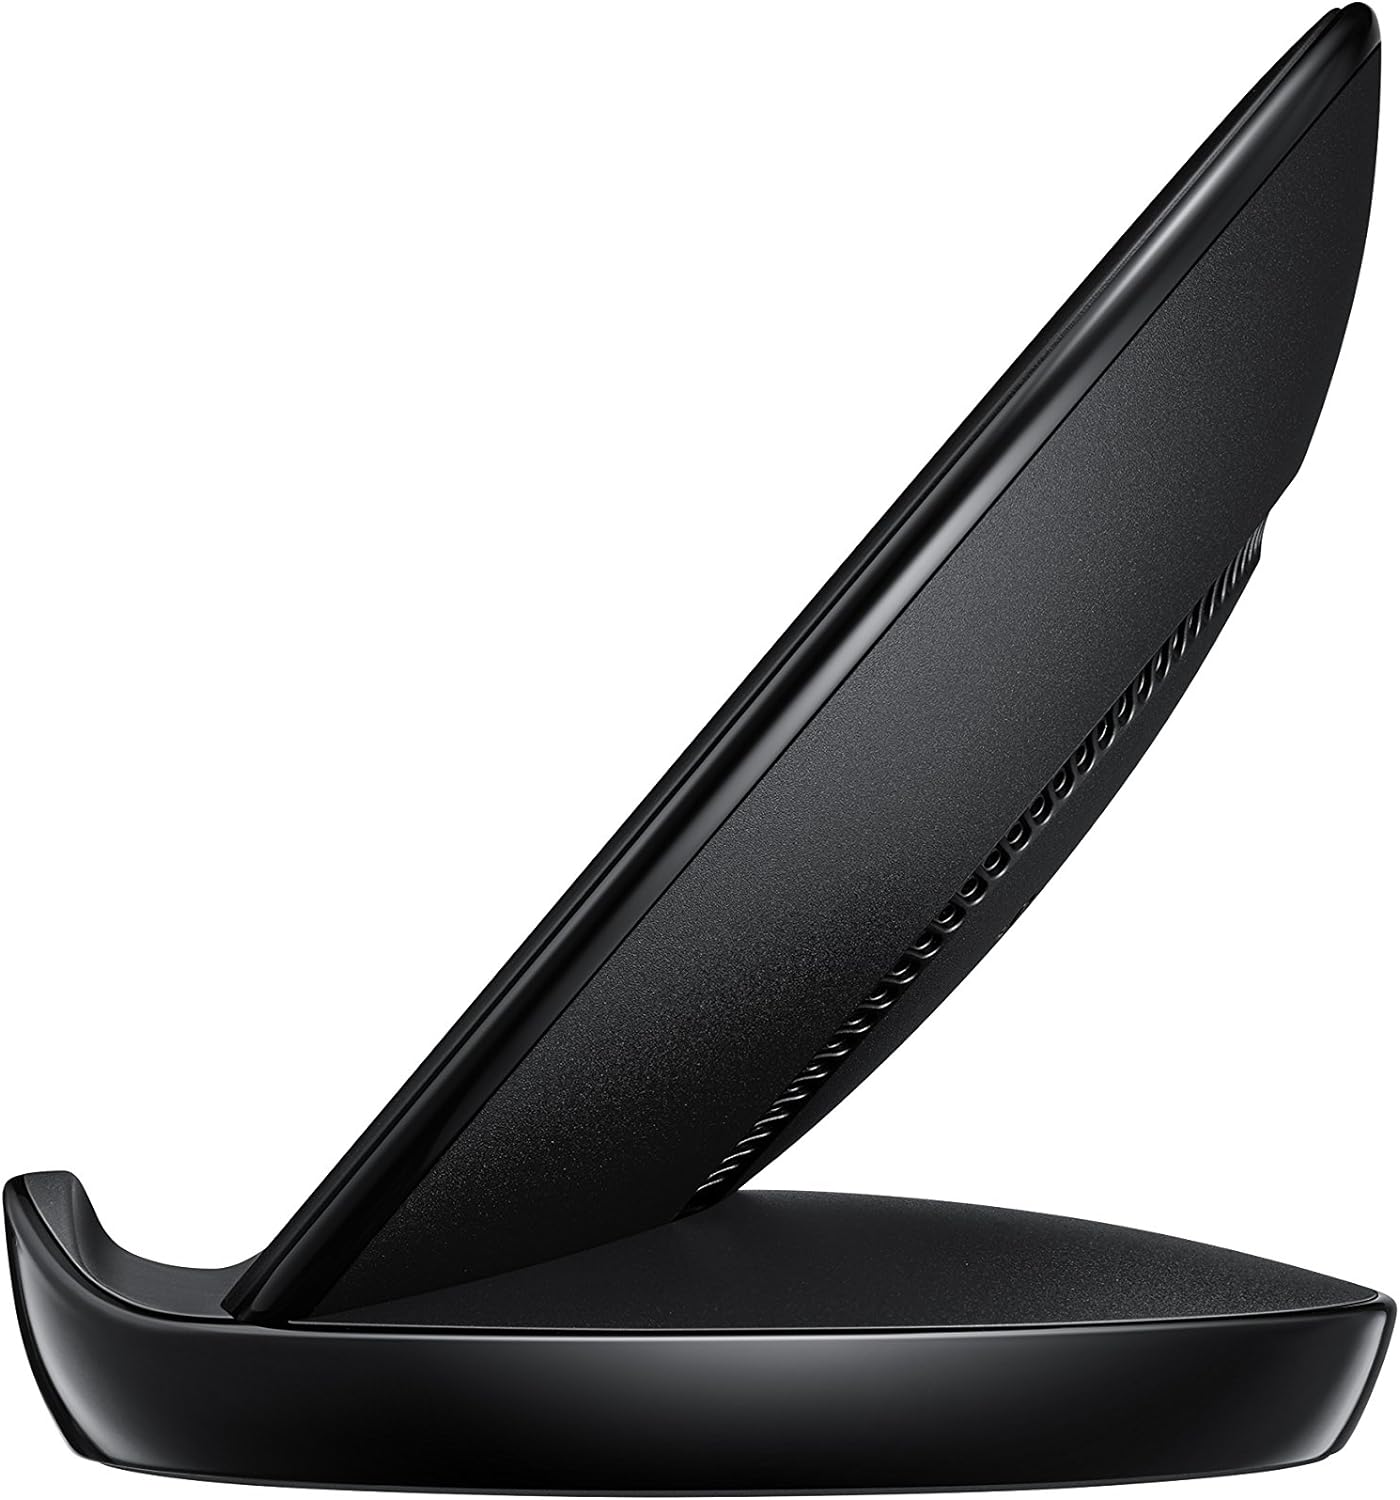 Samsung EP-N5100 Qi Certified Fast Wireless Charging Stand - Black (Refurbished)